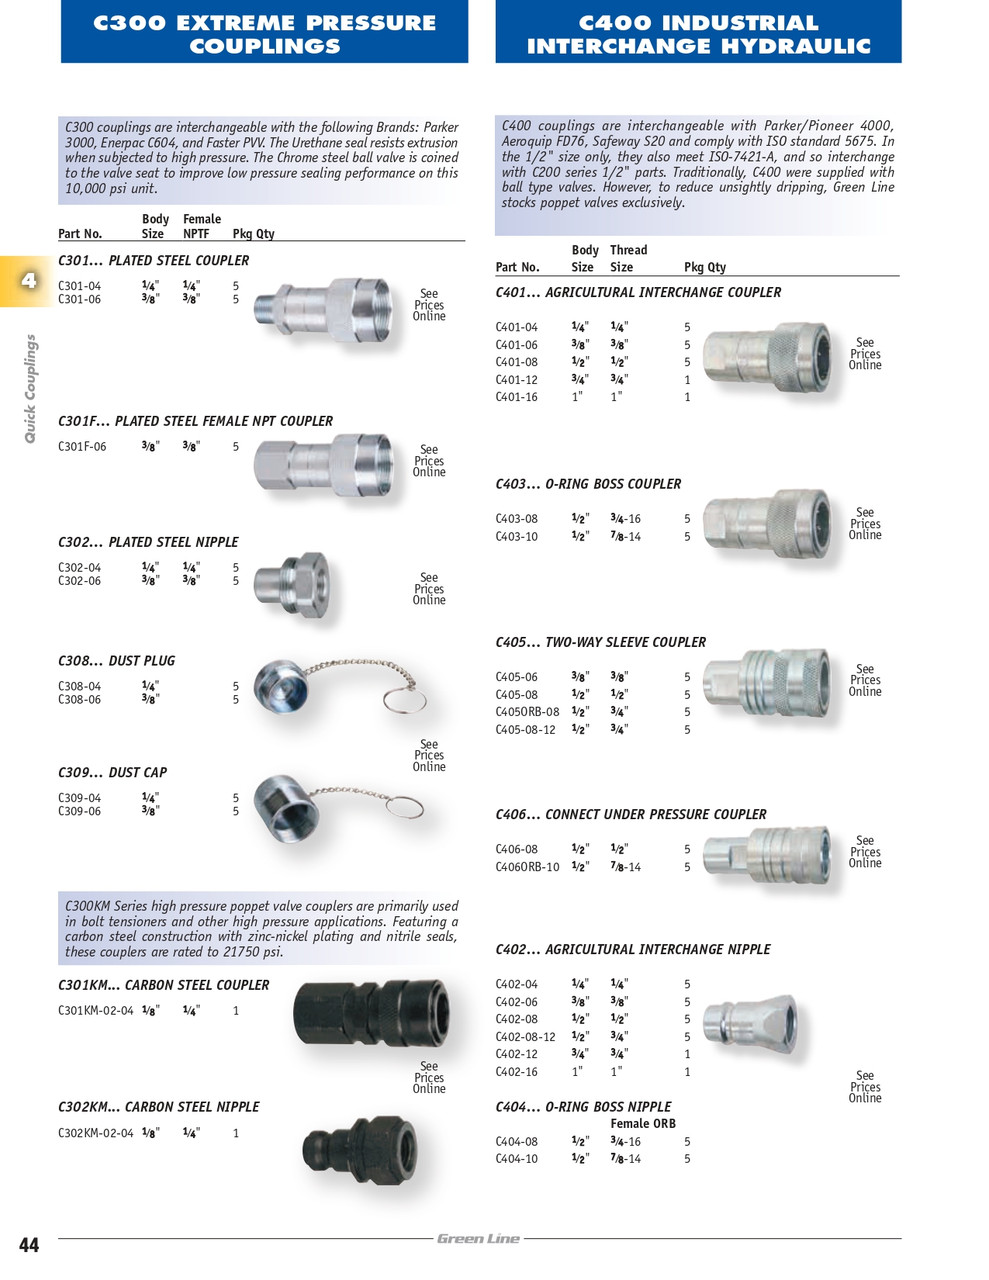 1/4" C300 Series Extreme Pressure Dust Plug   C308-04